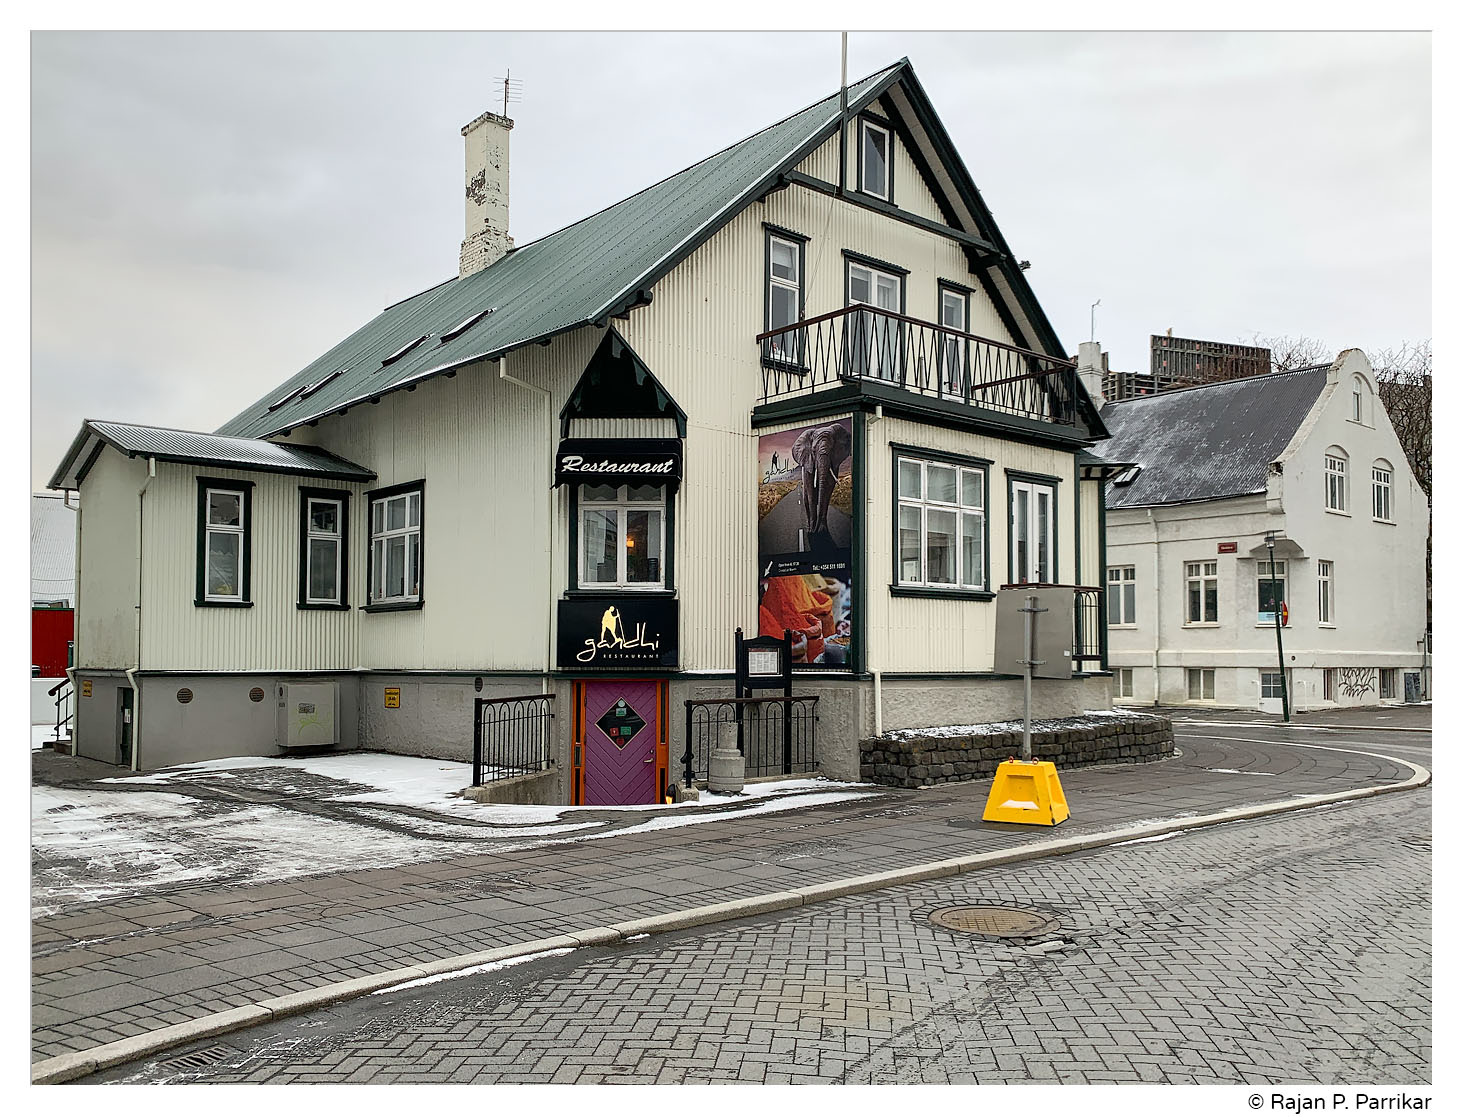 Gandhi Restaurant, Reykjavík